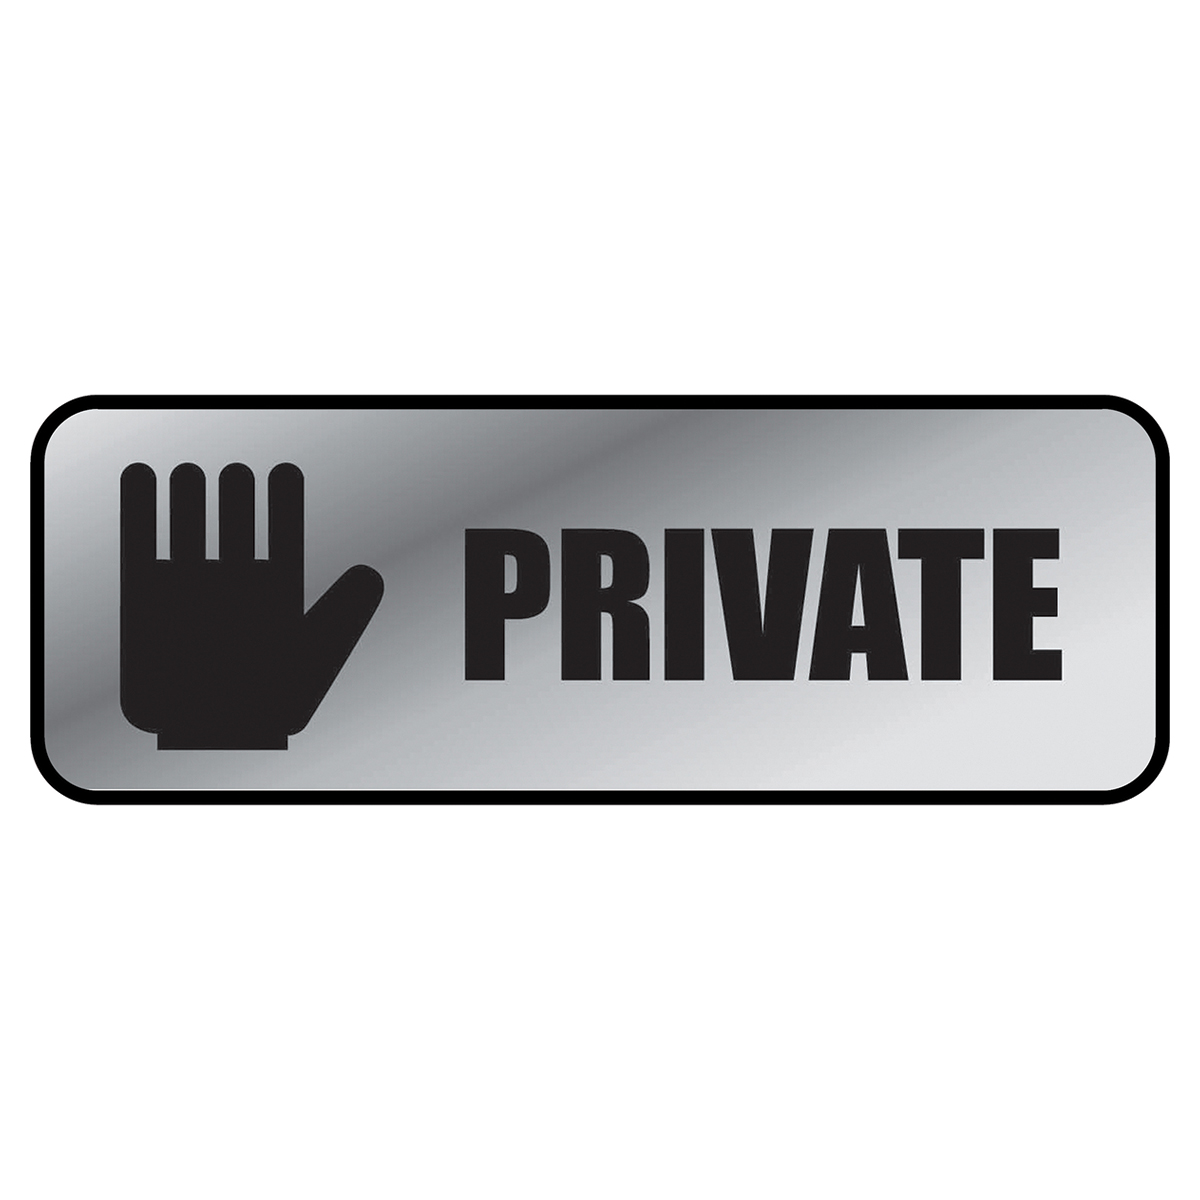 PRIVATE - Metal Sign - 098210